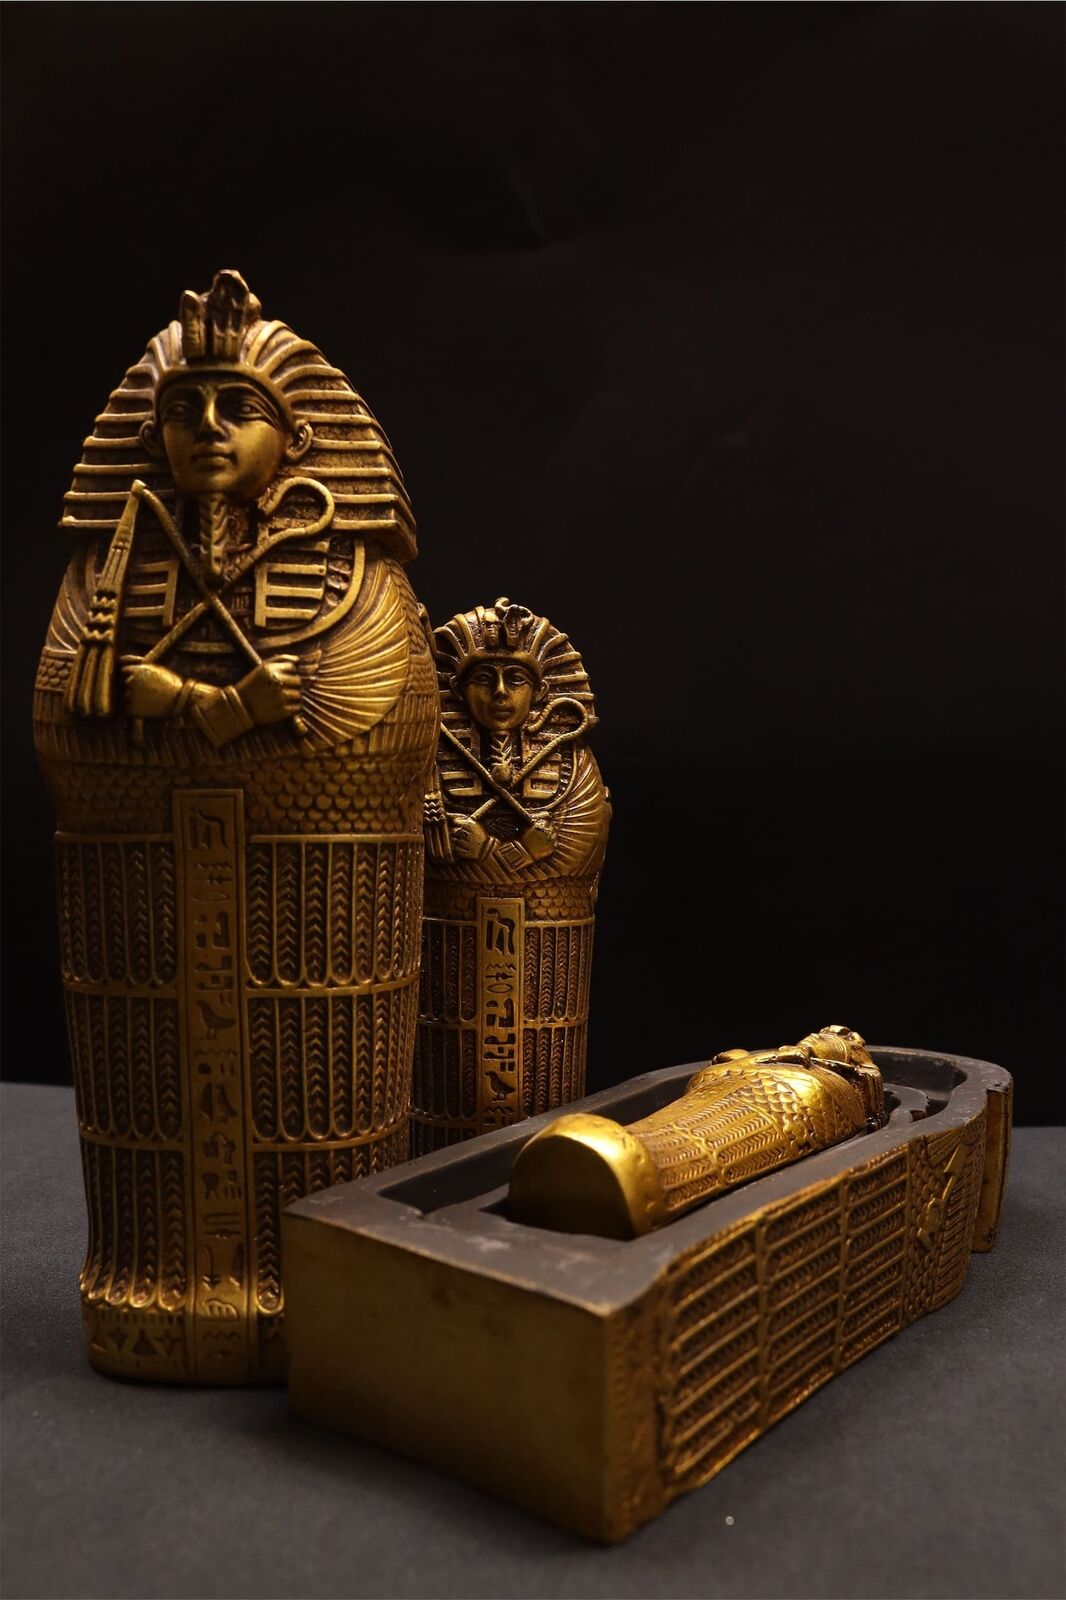 King Tutankhamun Coffins with the king Tutankhamun inside, One of a kind